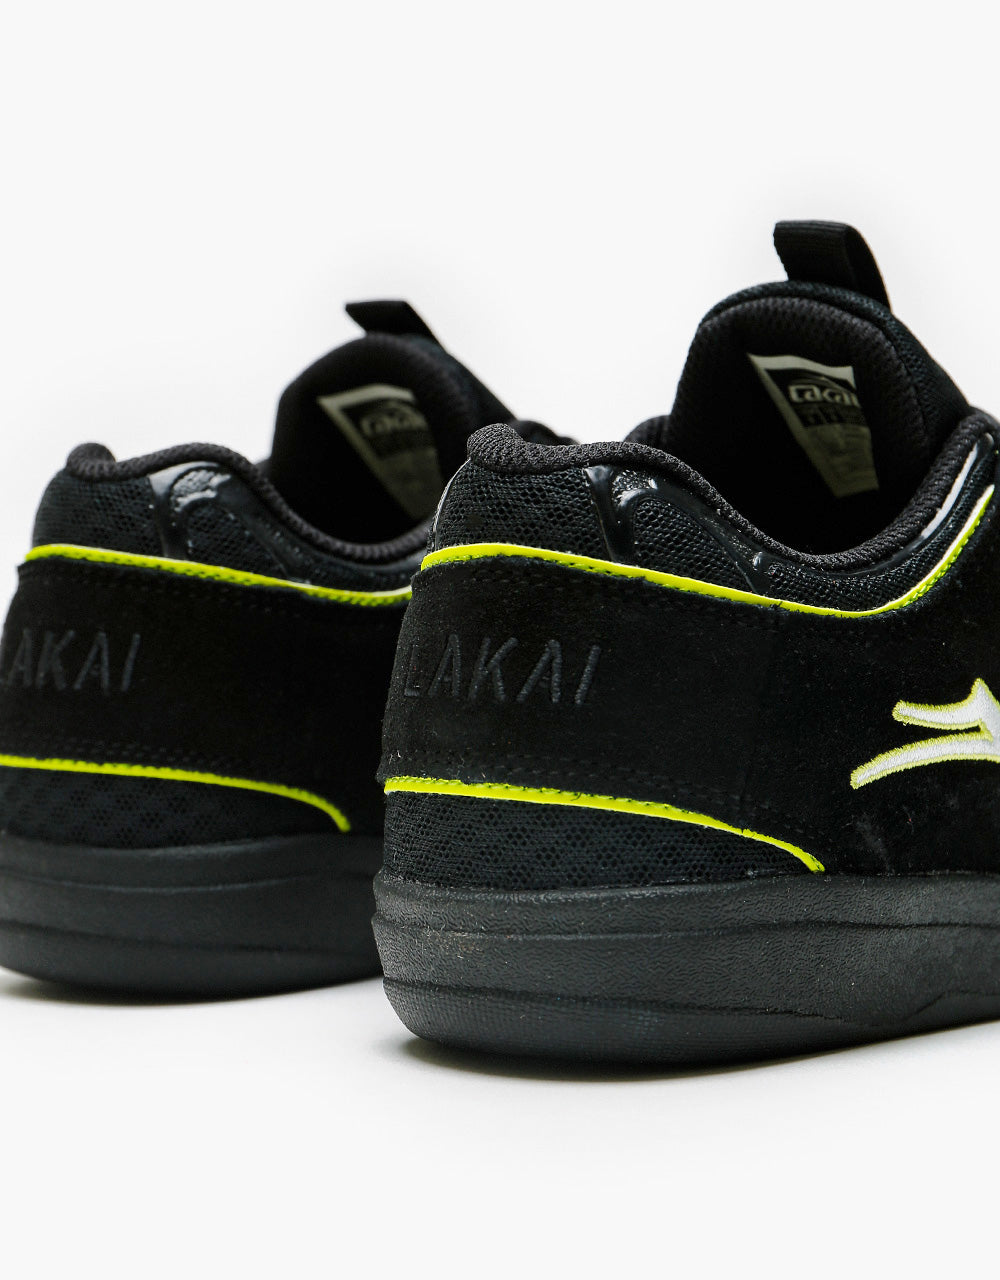 Lakai Carroll Skate Shoes - Black/Neon Green